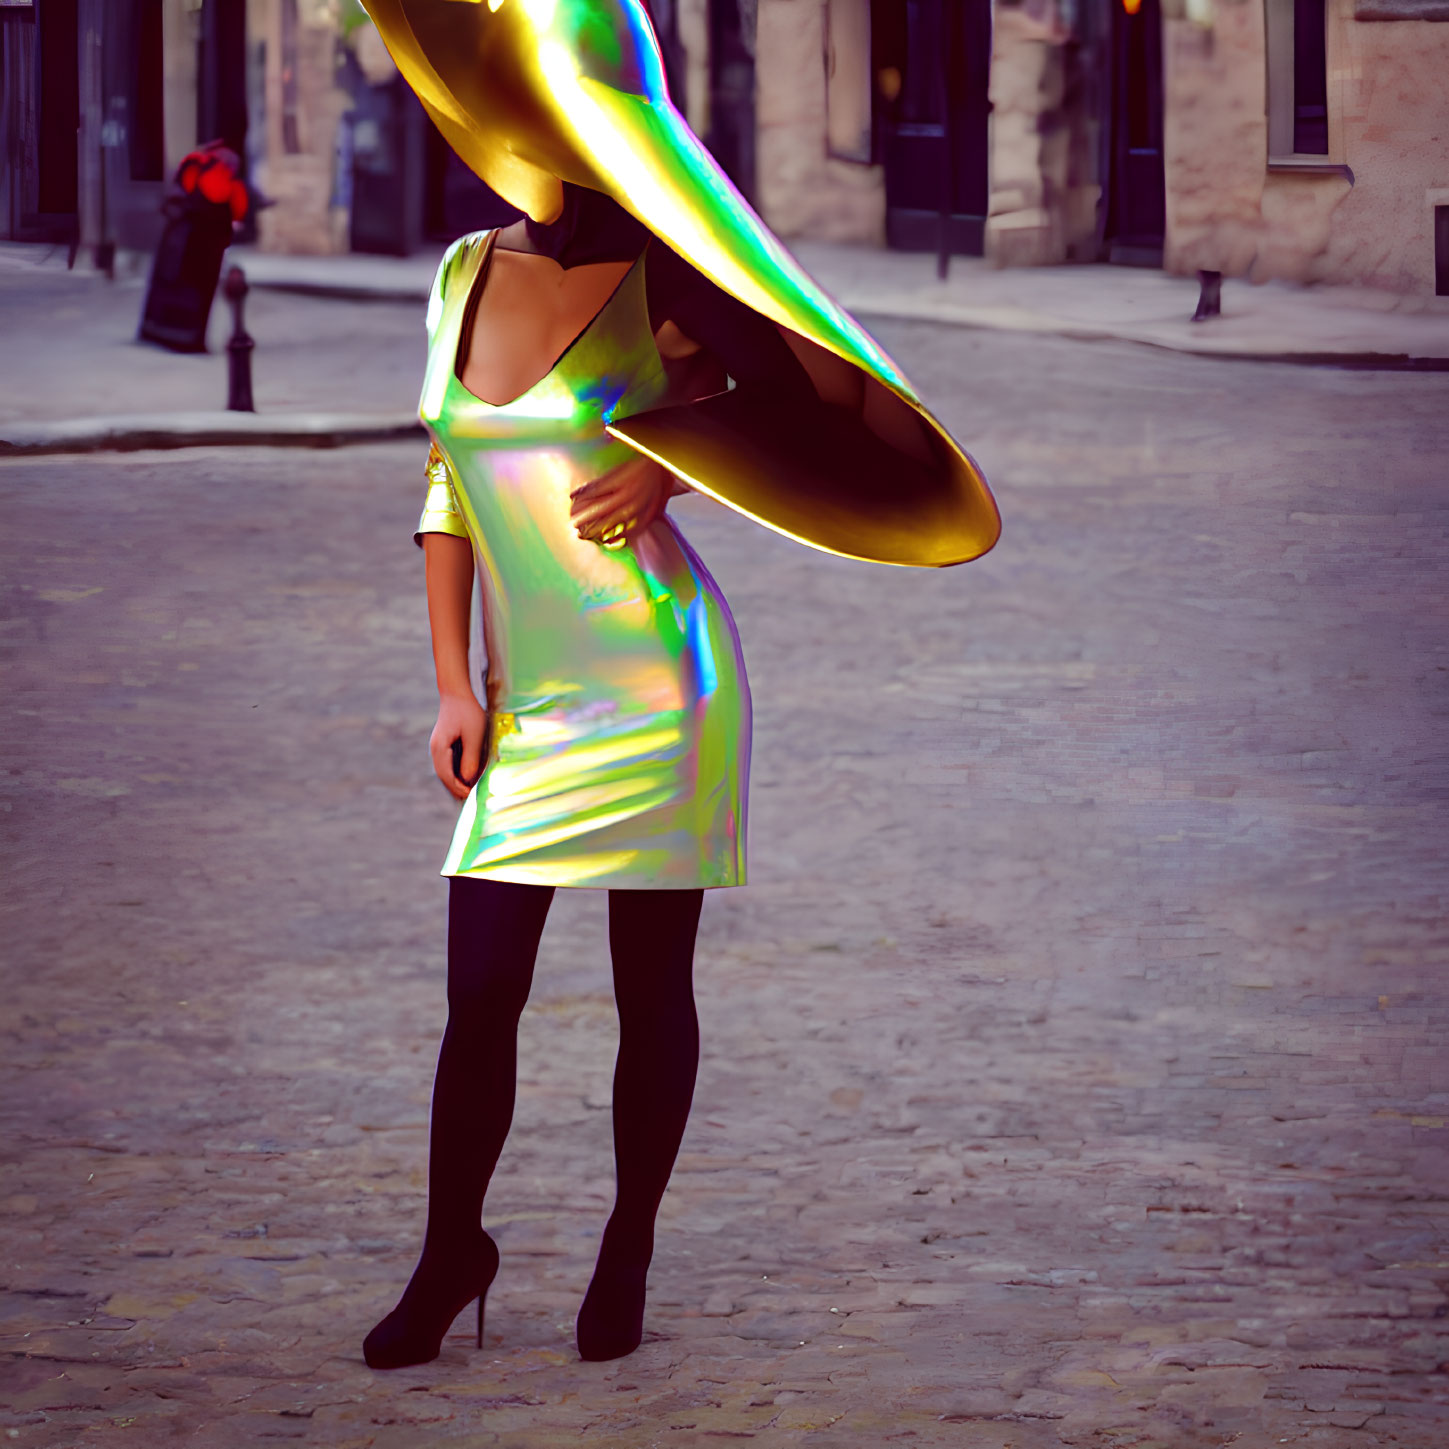 Futuristic figure in iridescent dress and wide-brimmed hat on cobblestone street